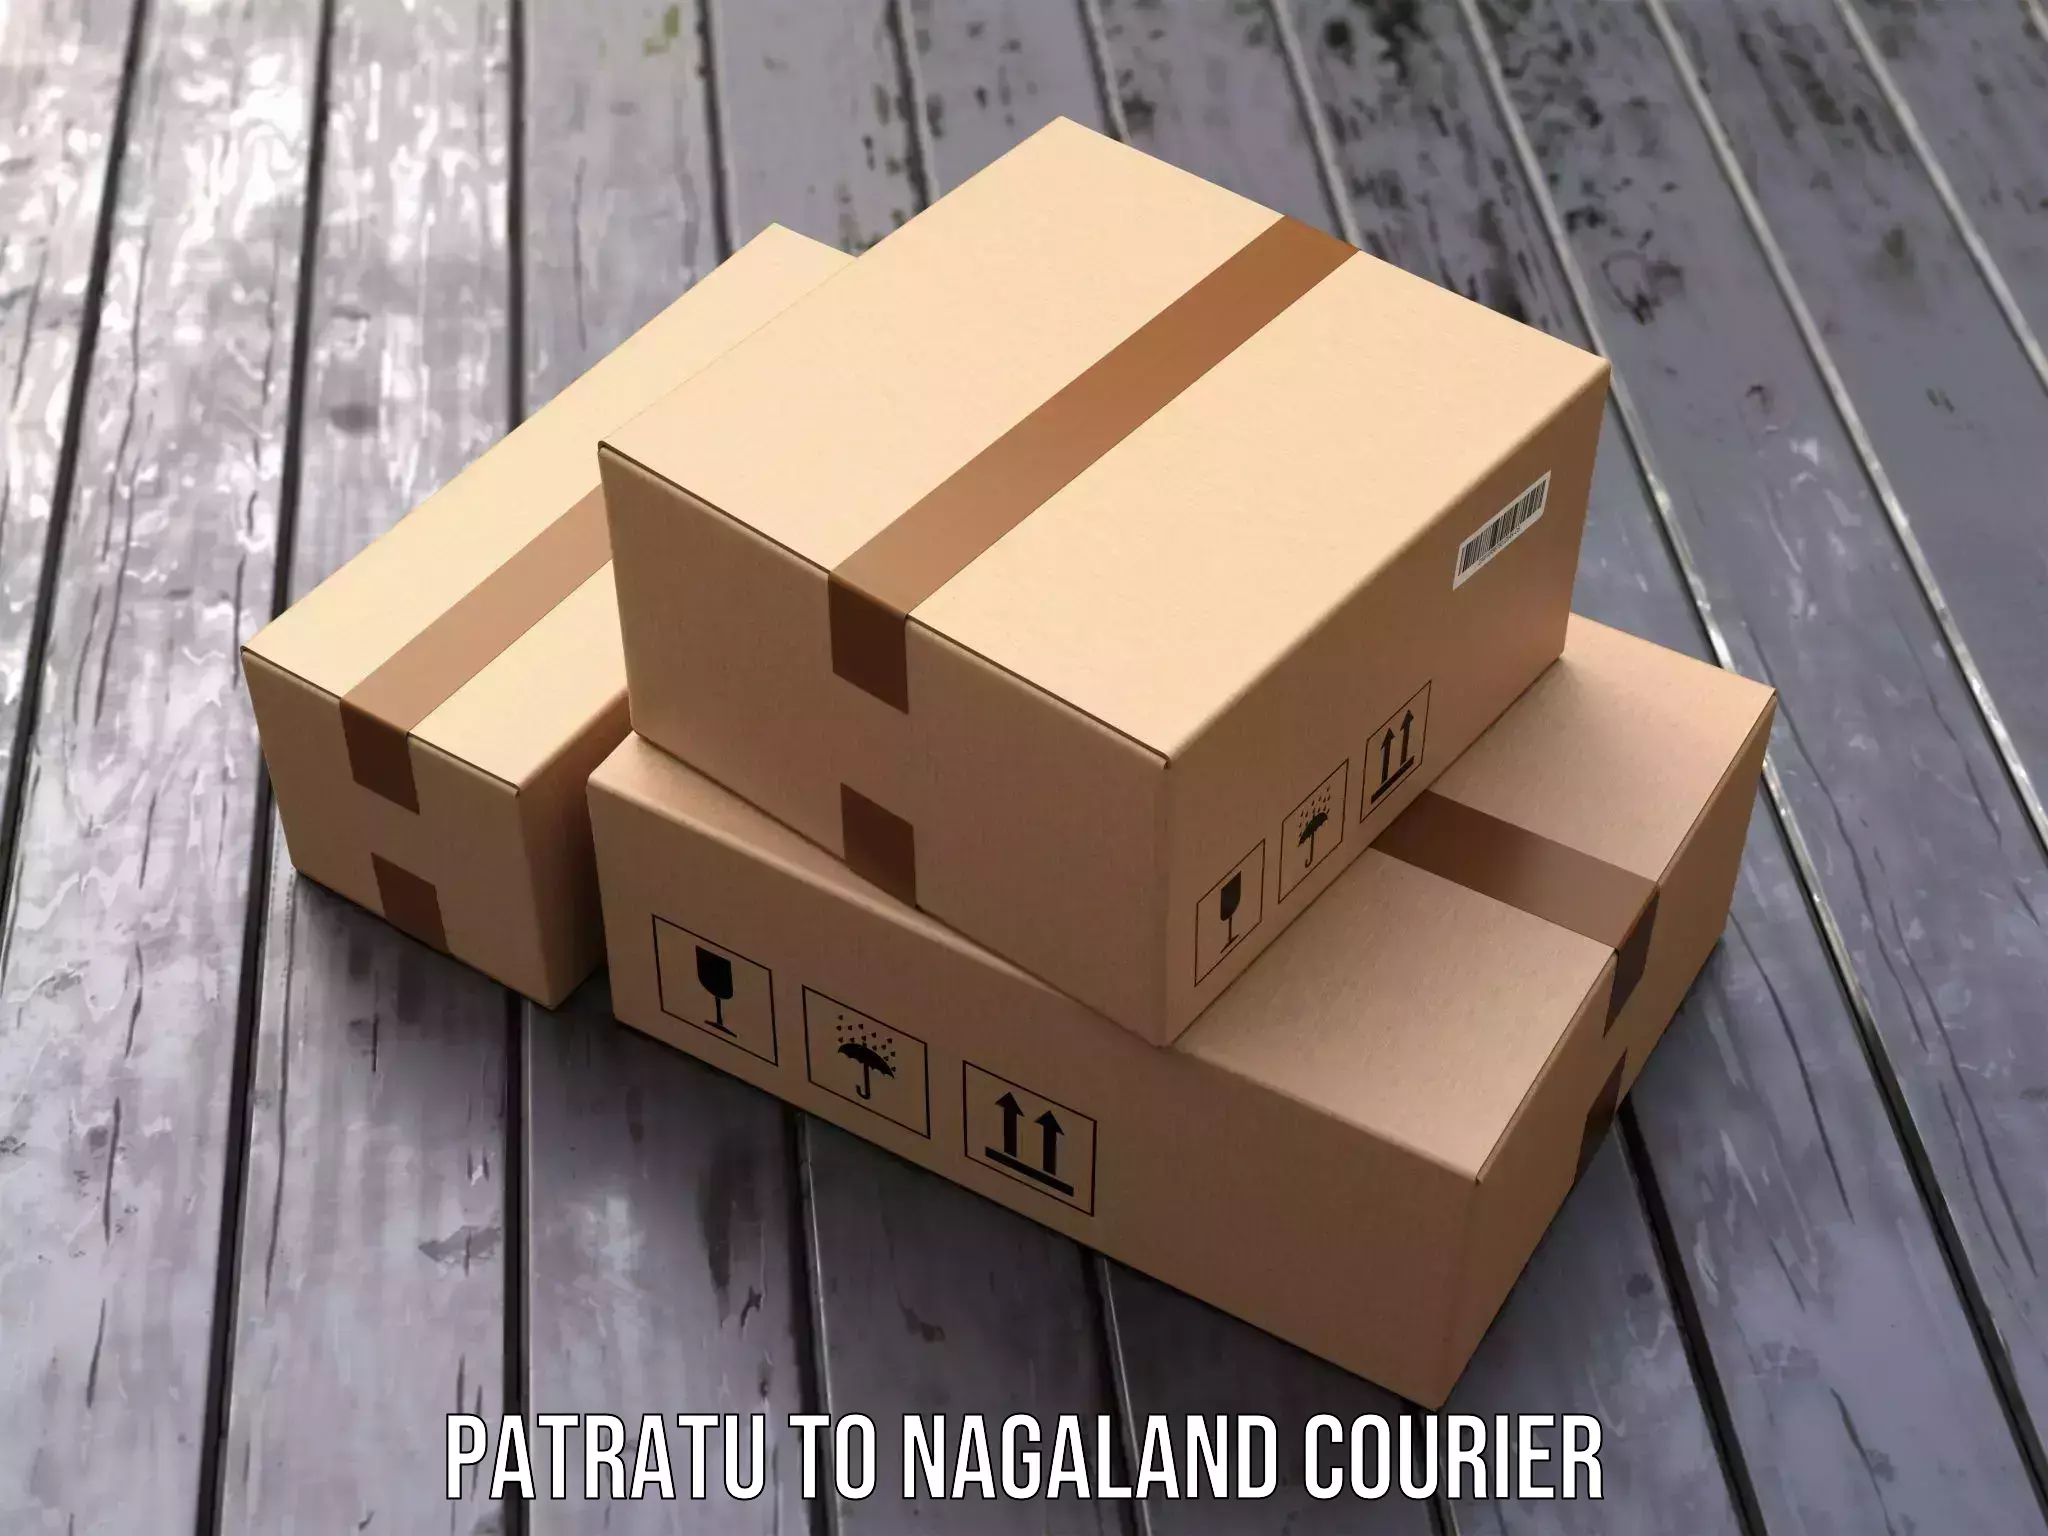 Express delivery capabilities Patratu to Nagaland